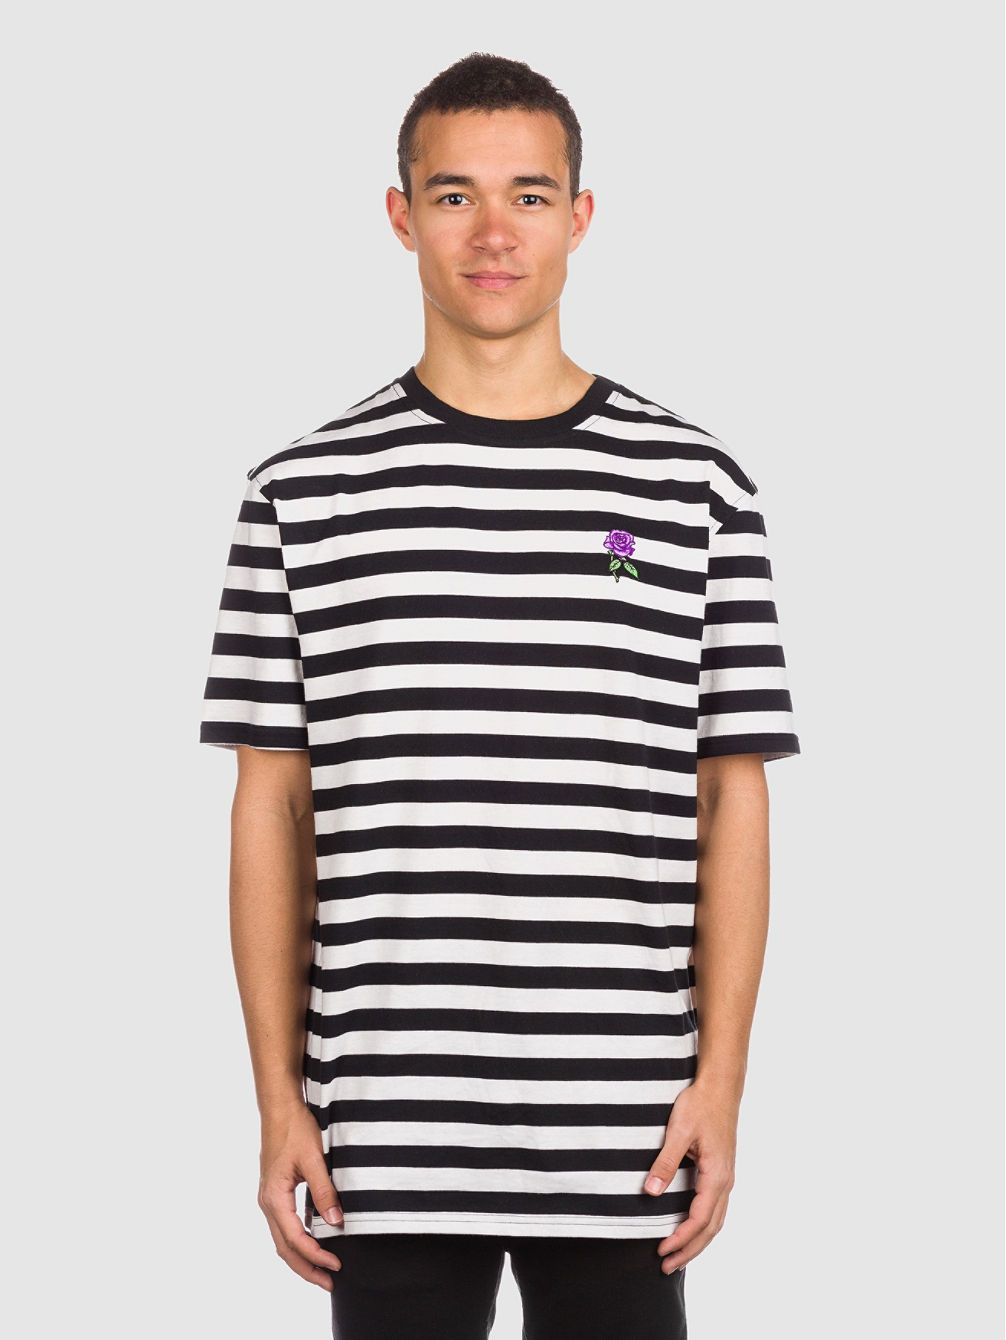 Thornless Stripes Camiseta